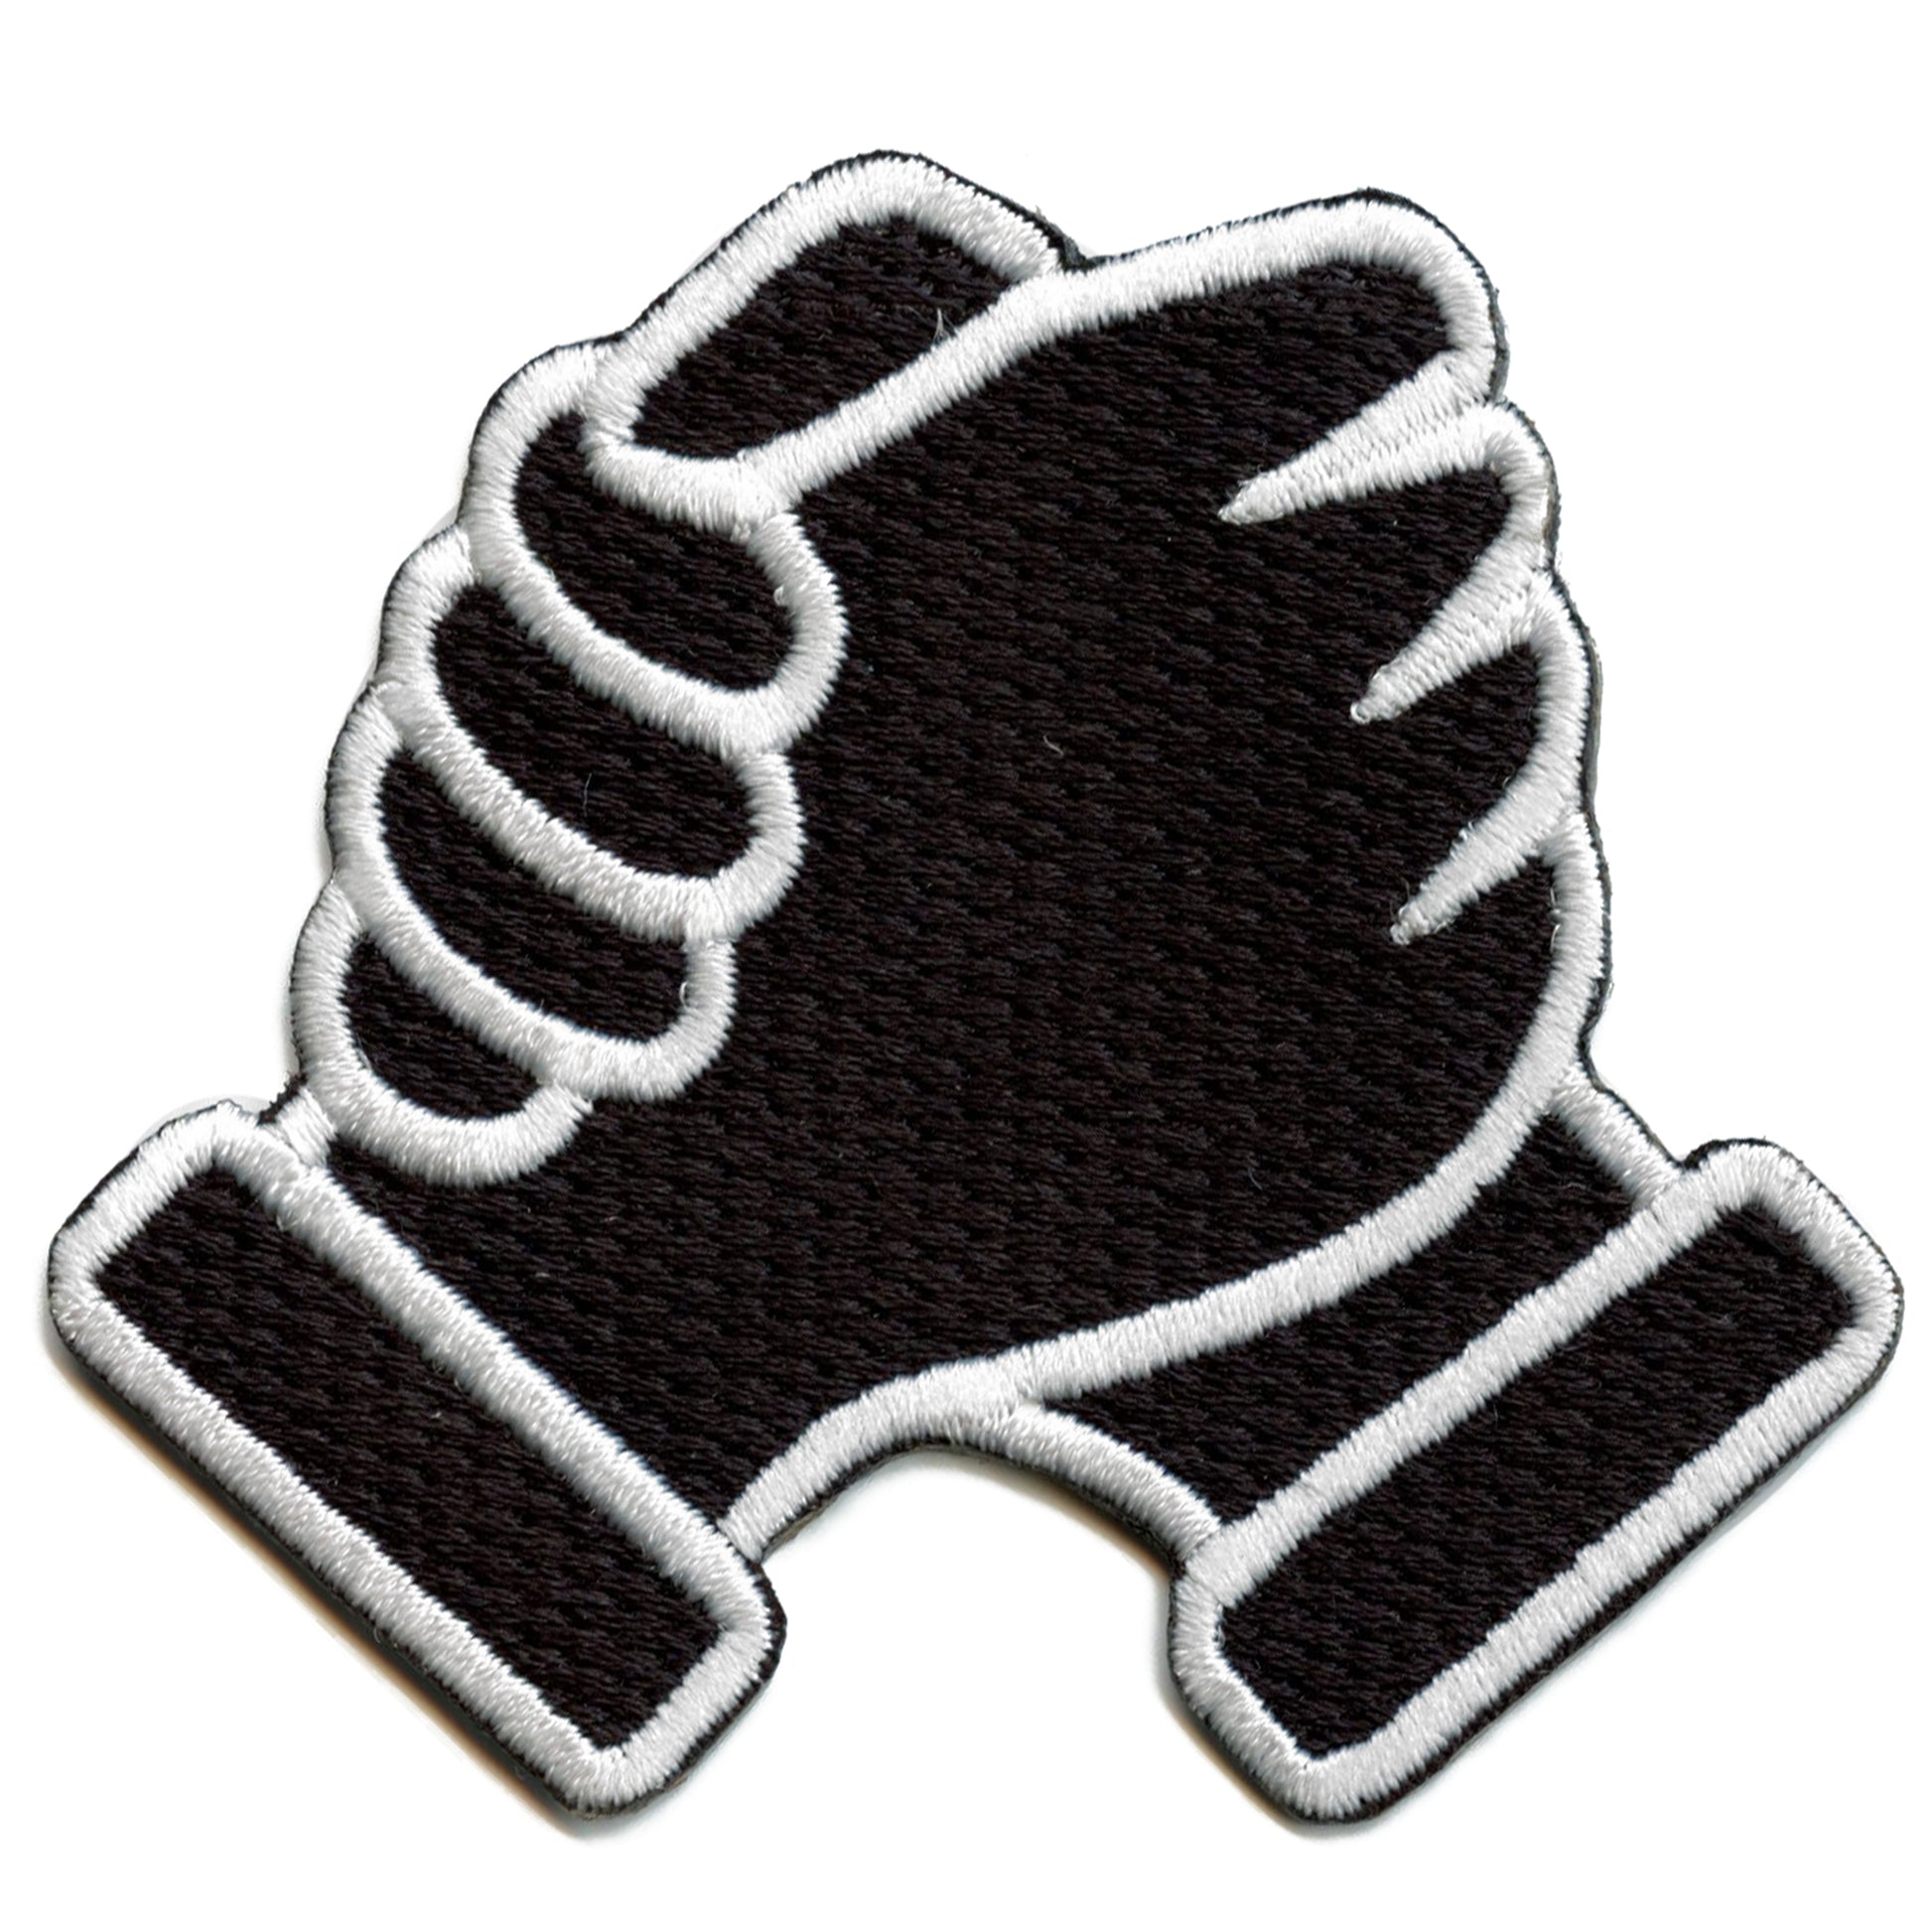 Homie Hands Handshake Black Emoji Iron on Patch 